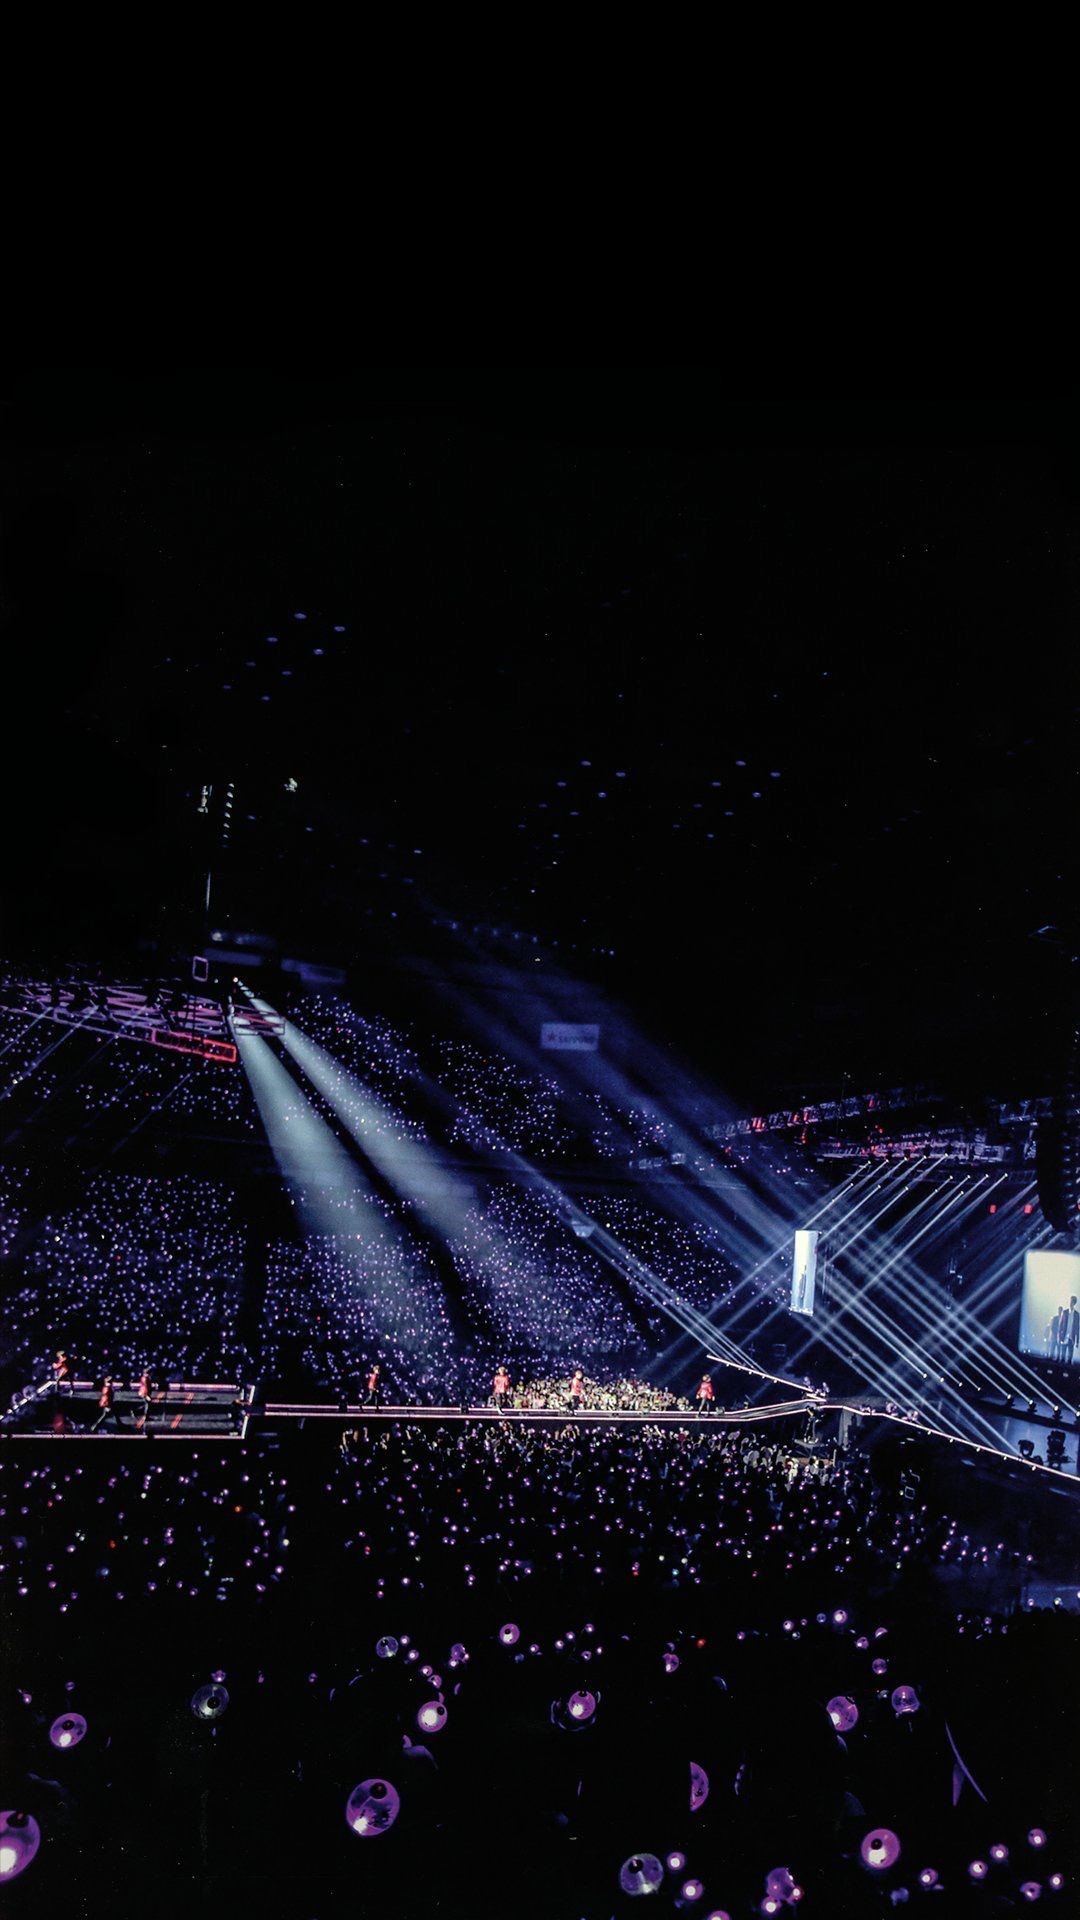 26+] BTS Concert Wallpapers - WallpaperSafari